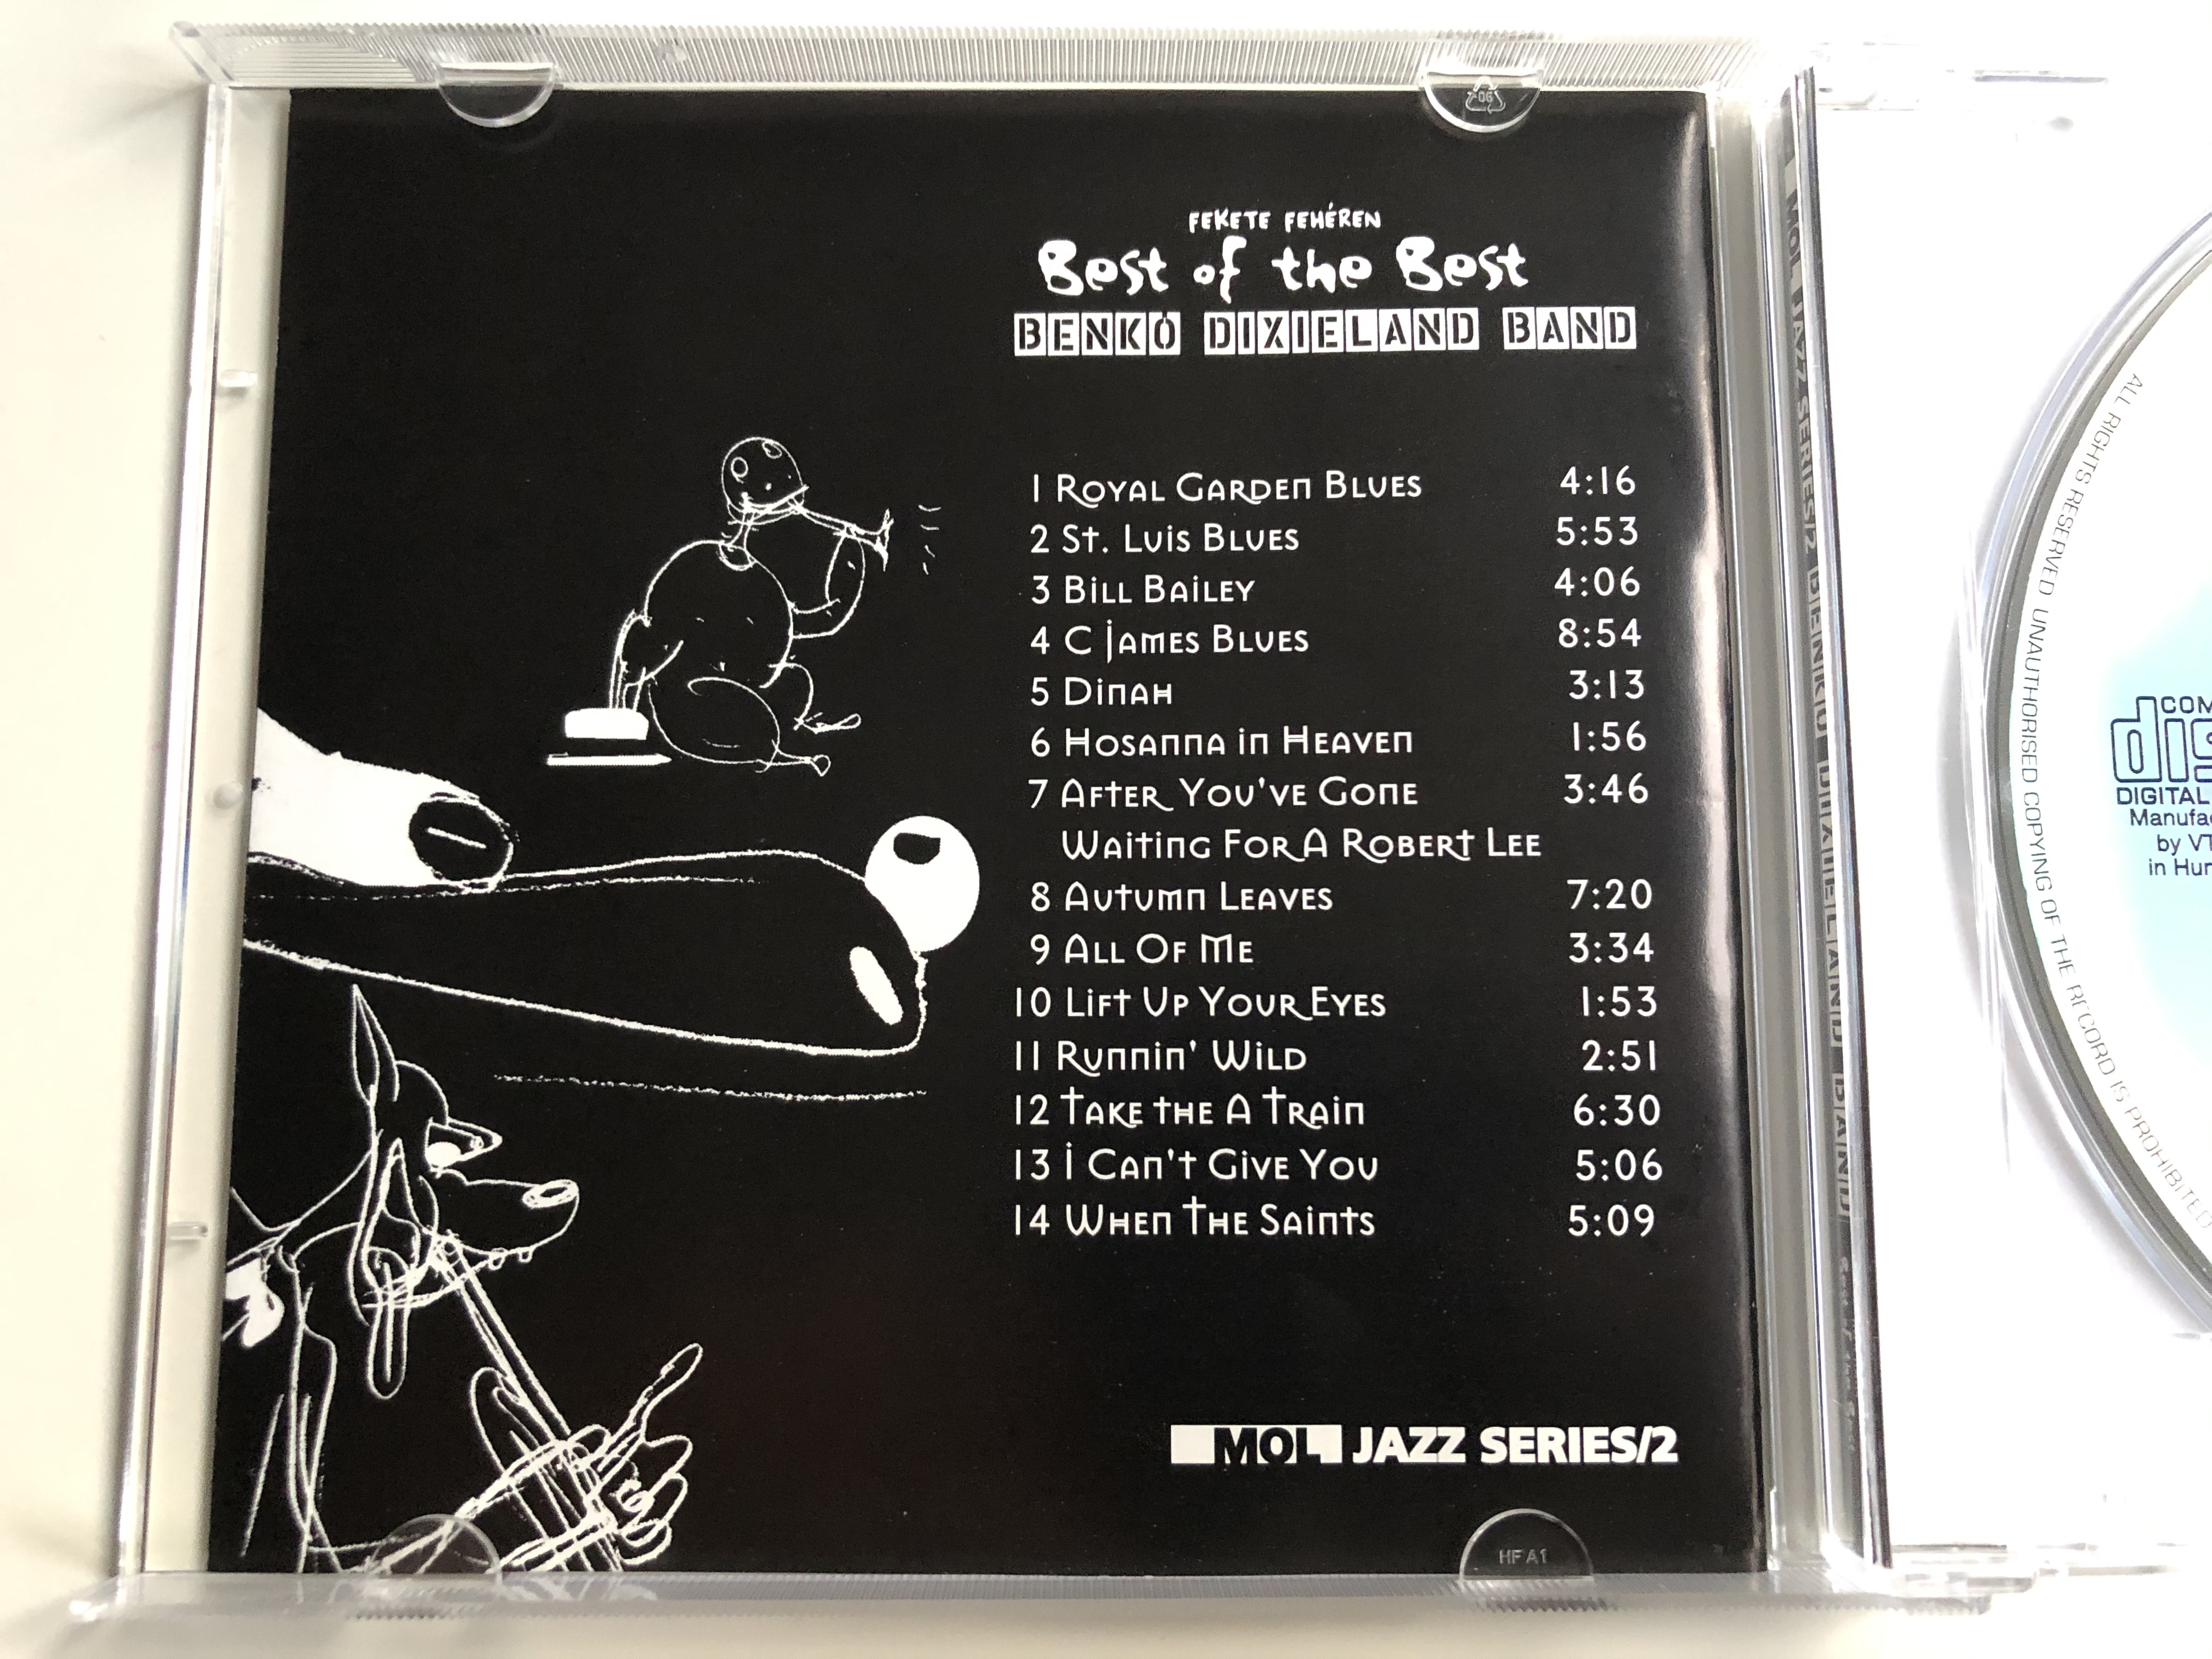 fekete-feh-ren-best-of-the-best-benk-dixieland-band-bencolor-audio-cd-1998-stereo-ben-cd-5425-3-.jpg